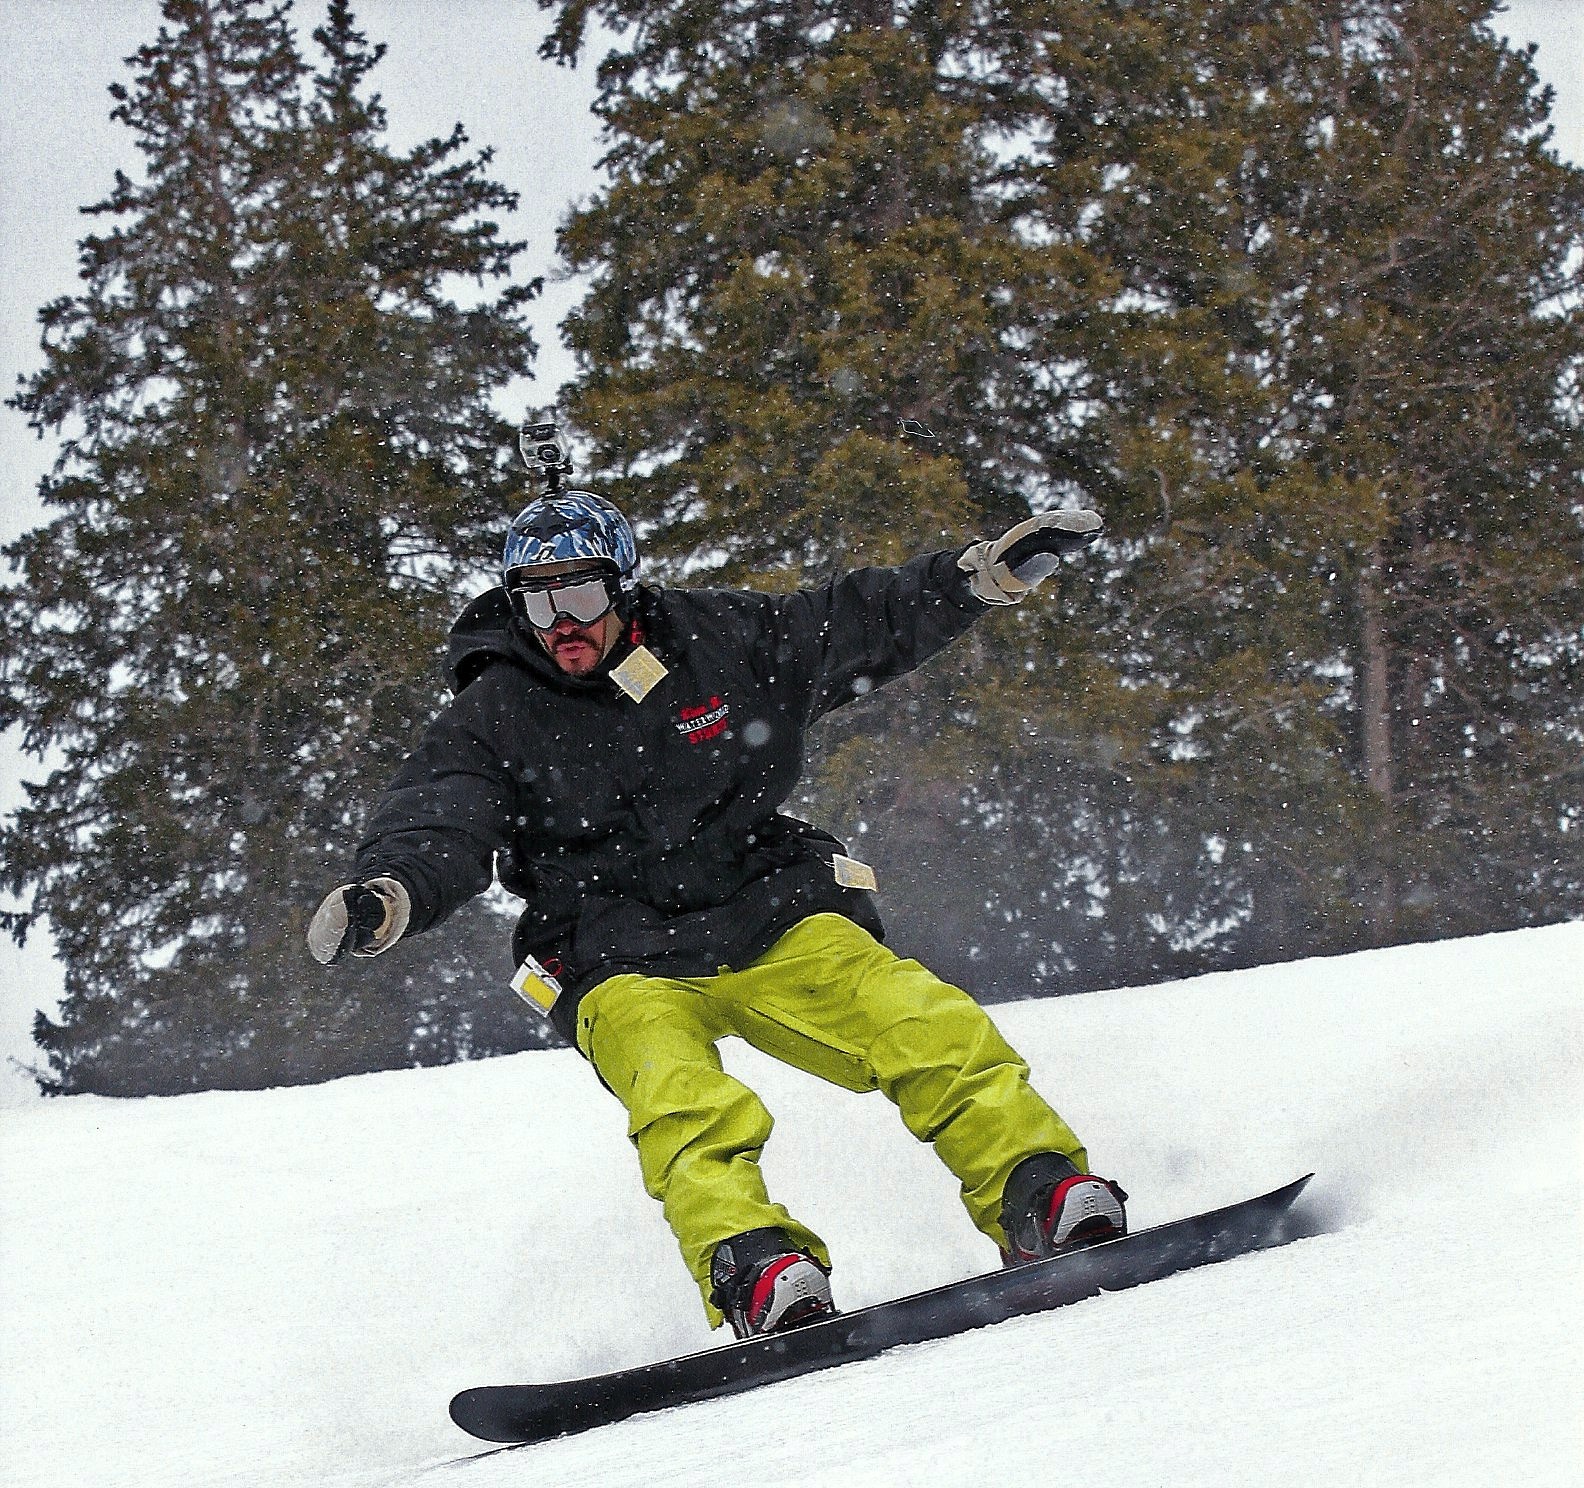 Kimo snowboarding Brighton, Utah